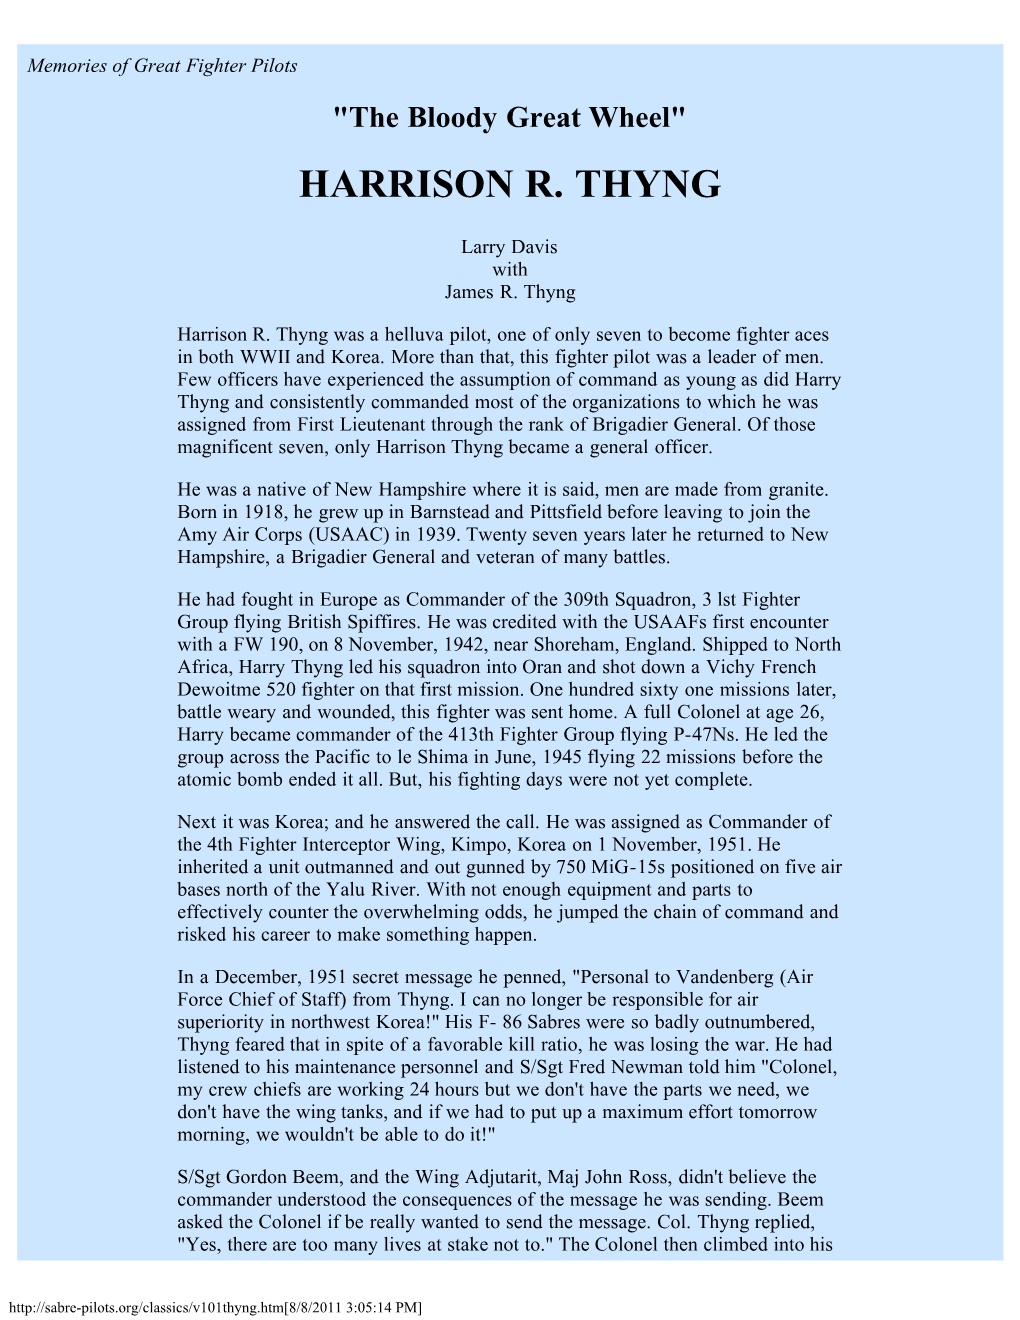 Harrison R. Thyng